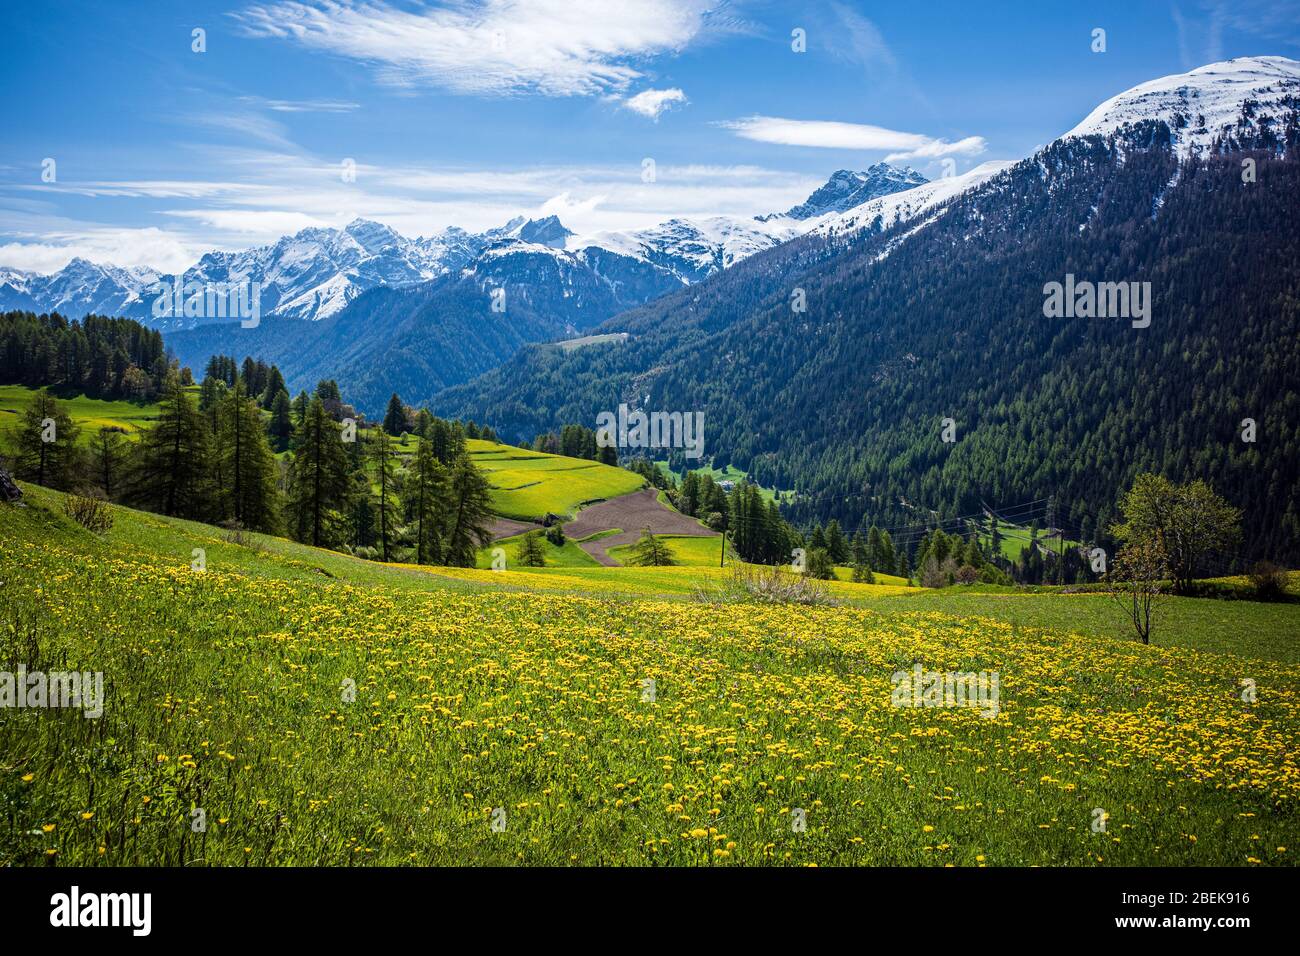 Landschaft in den Bergen, guarda schweiz schellen-ursli Land  Stockfotografie - Alamy